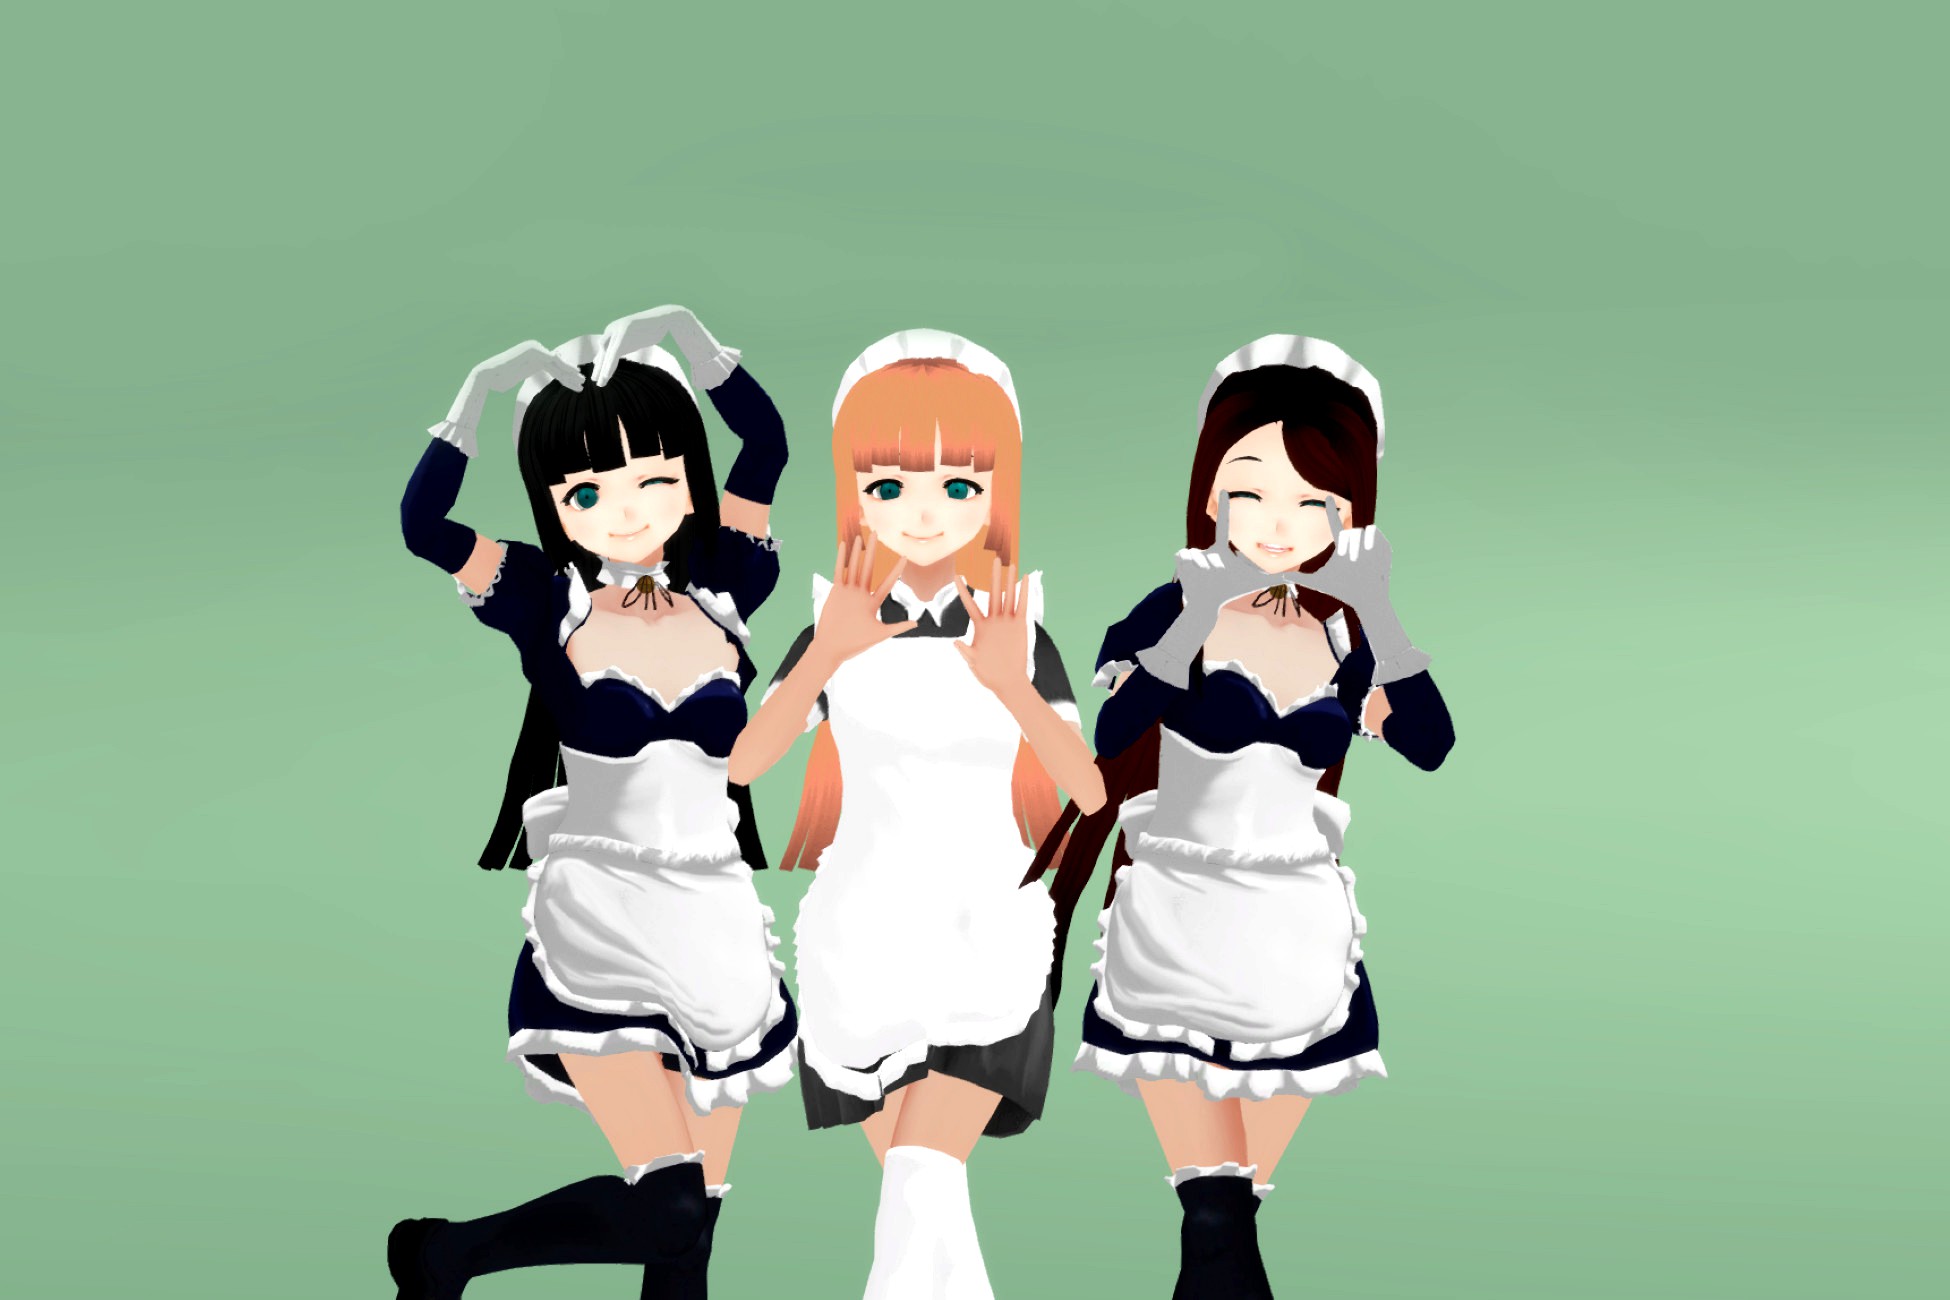 Maids - Anime Girl Characters